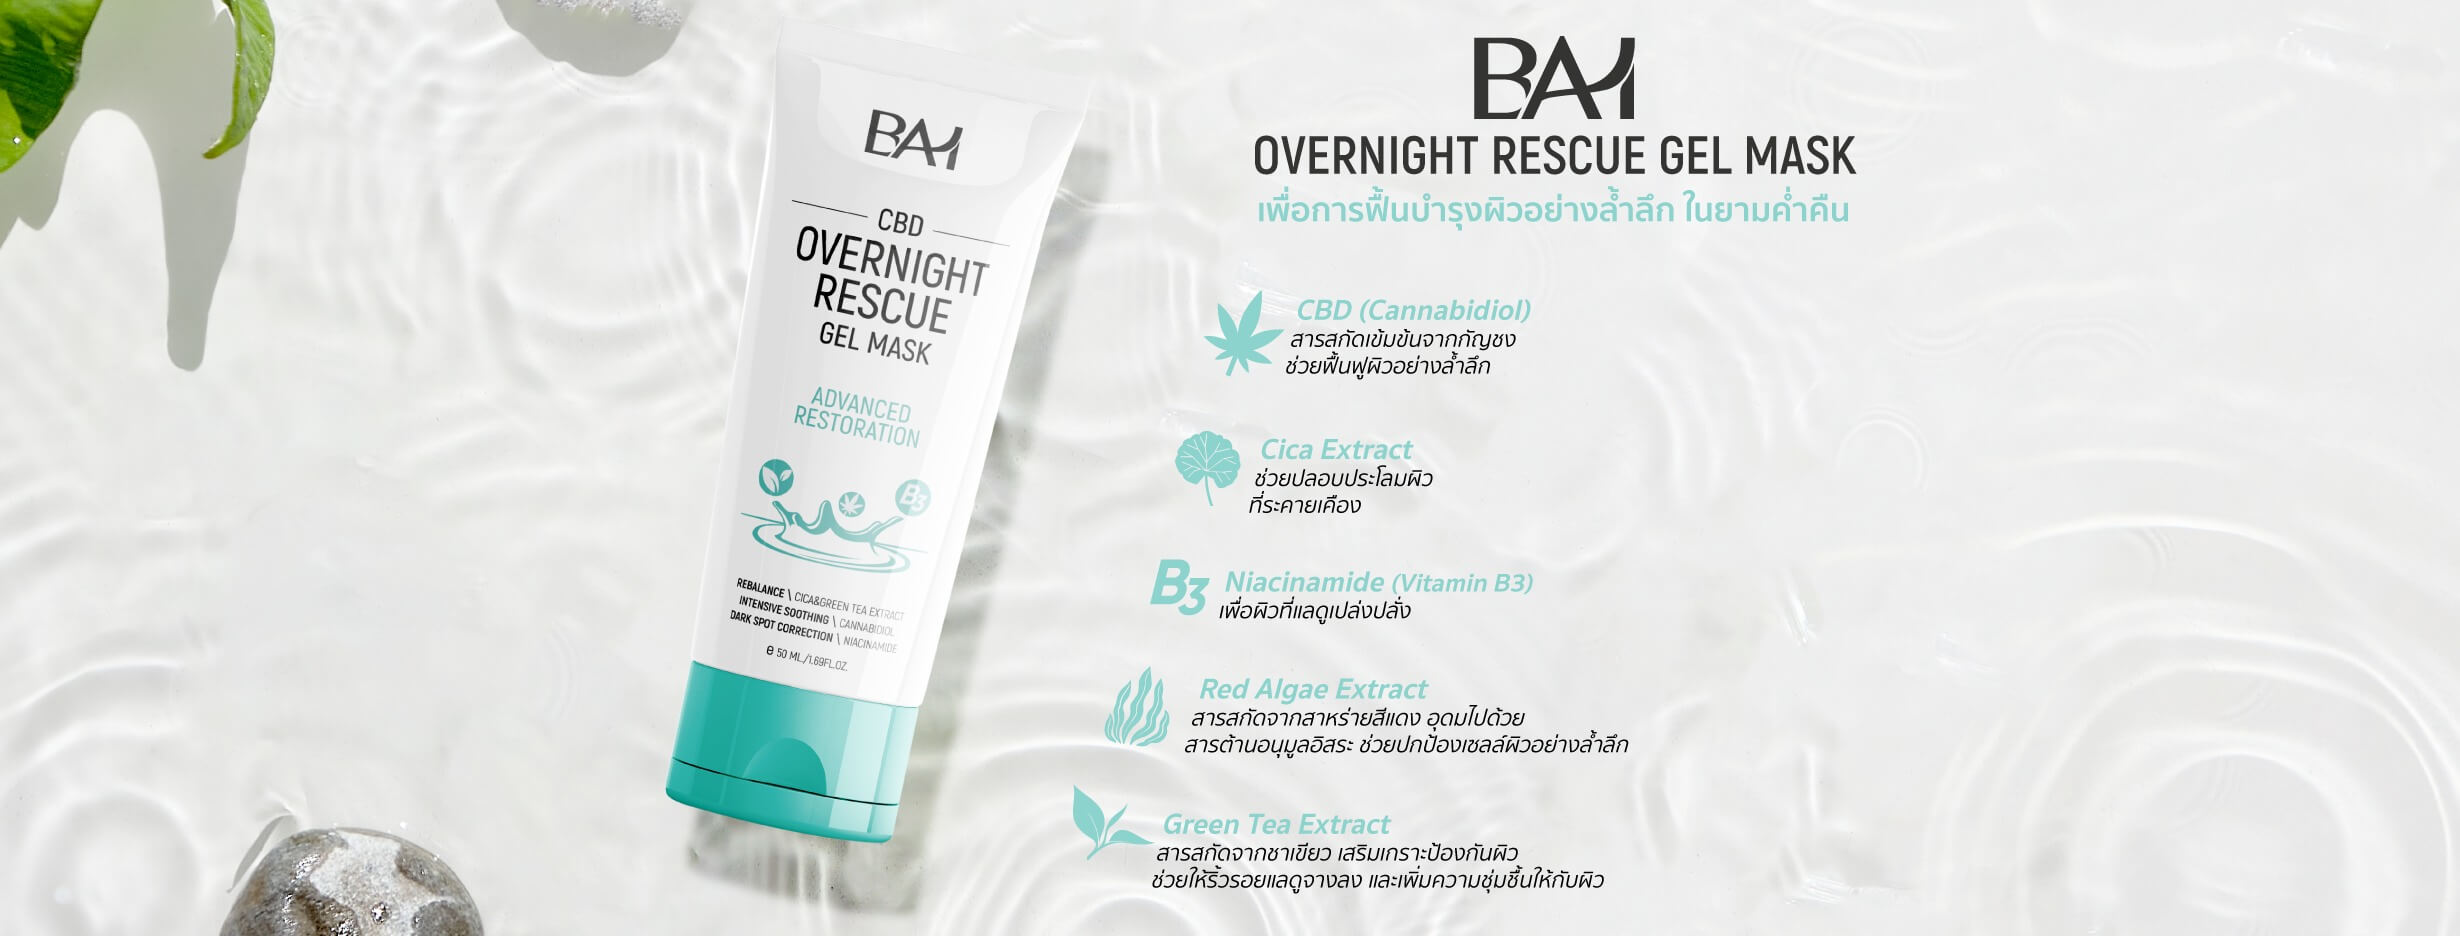 BAI(บาอิ) Overnight Rescue Gel Mask